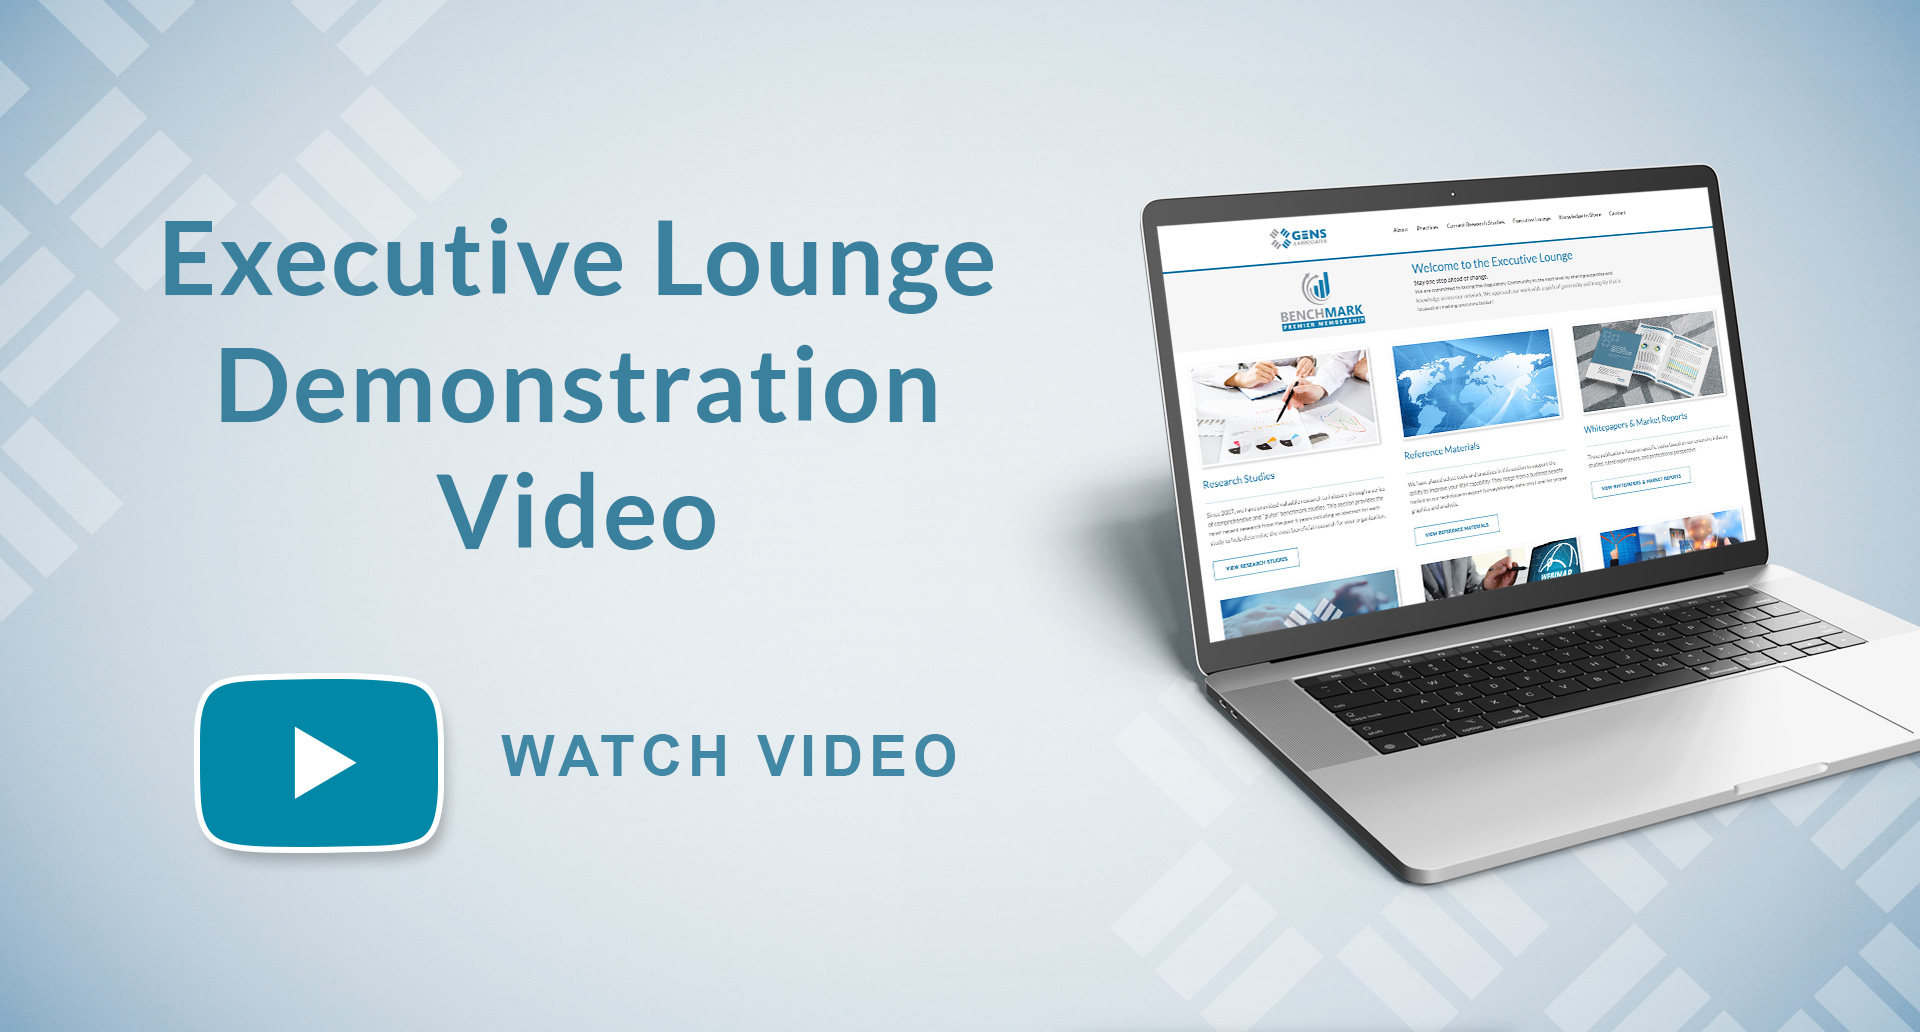 Executive Lounge Video Tutorial